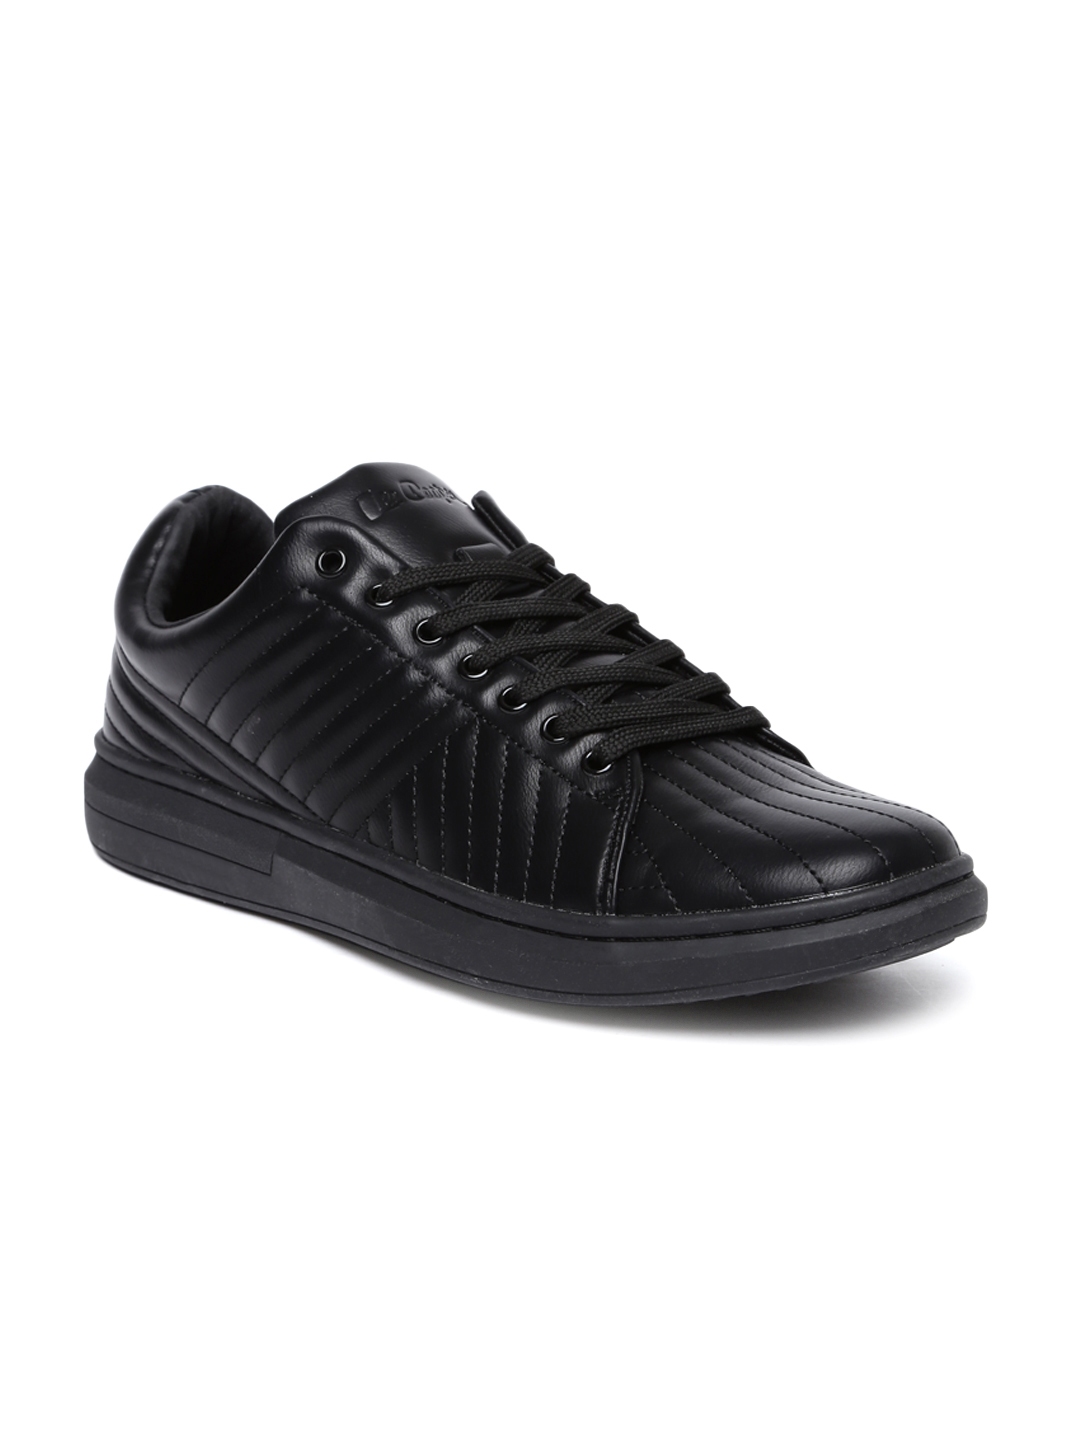 Buy Lee Cooper Men Black Sneakers 